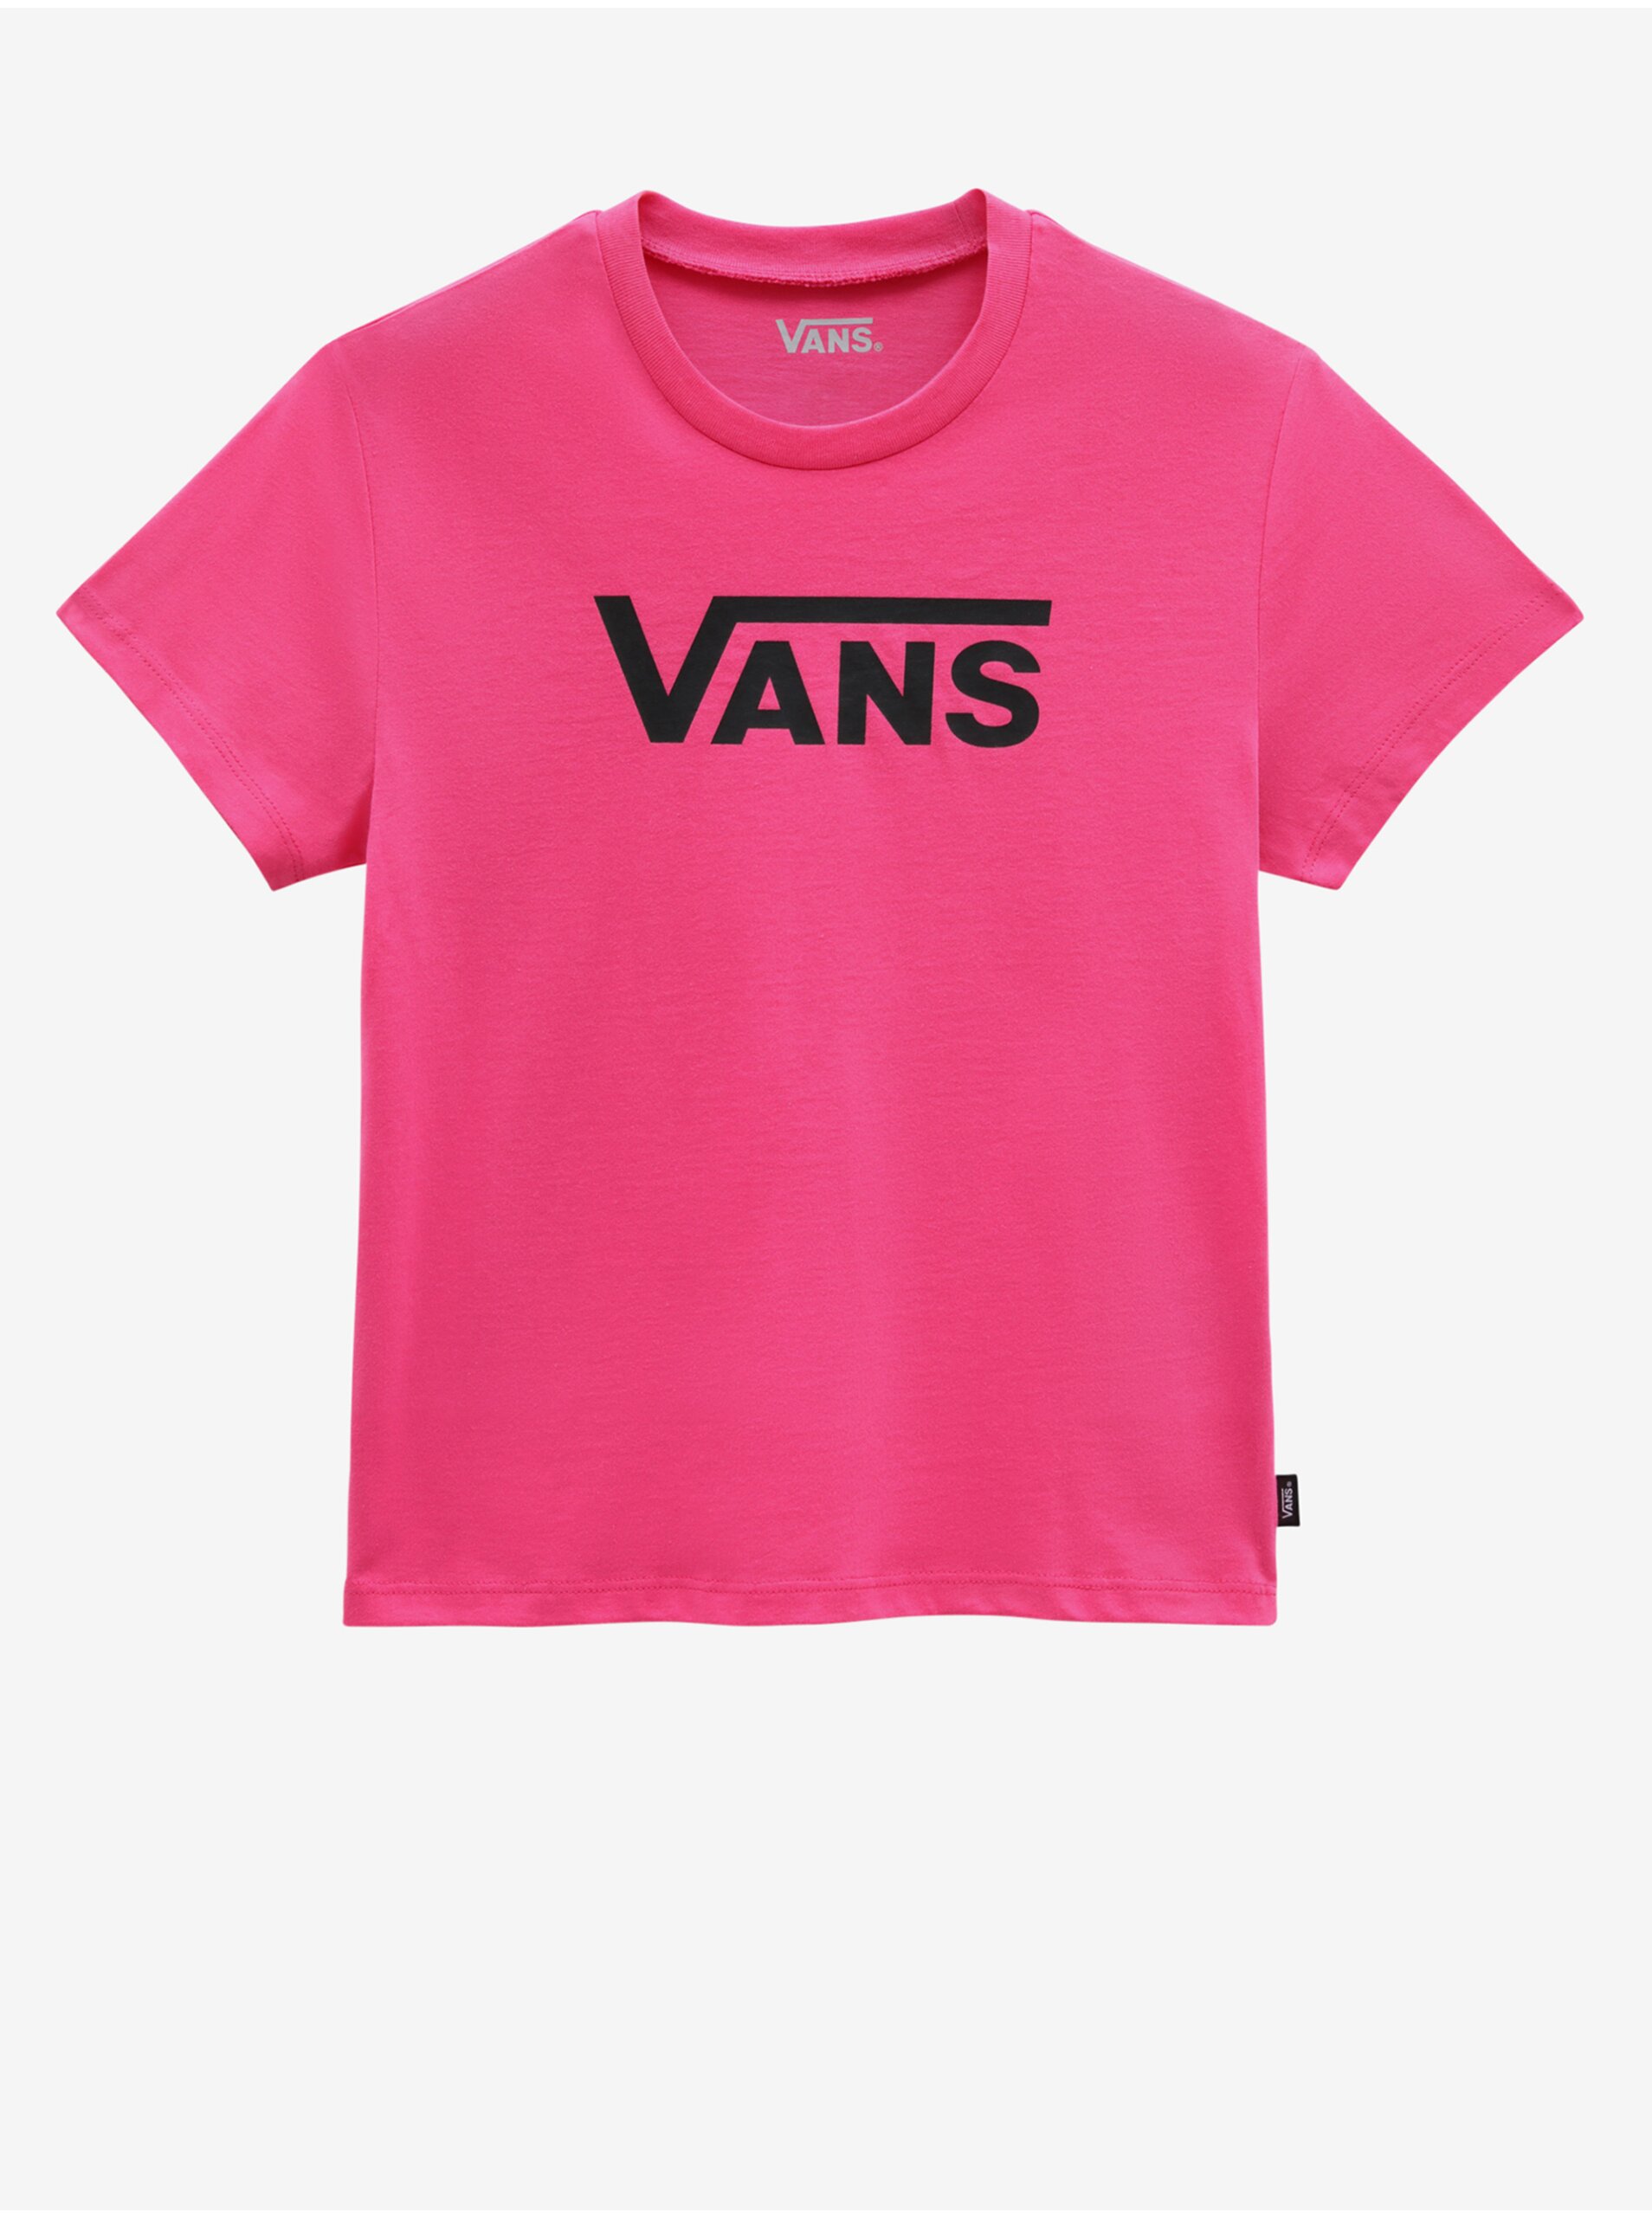 Lacno Tmavo ružové dievčenské tričko VANS Flying Crew Girls